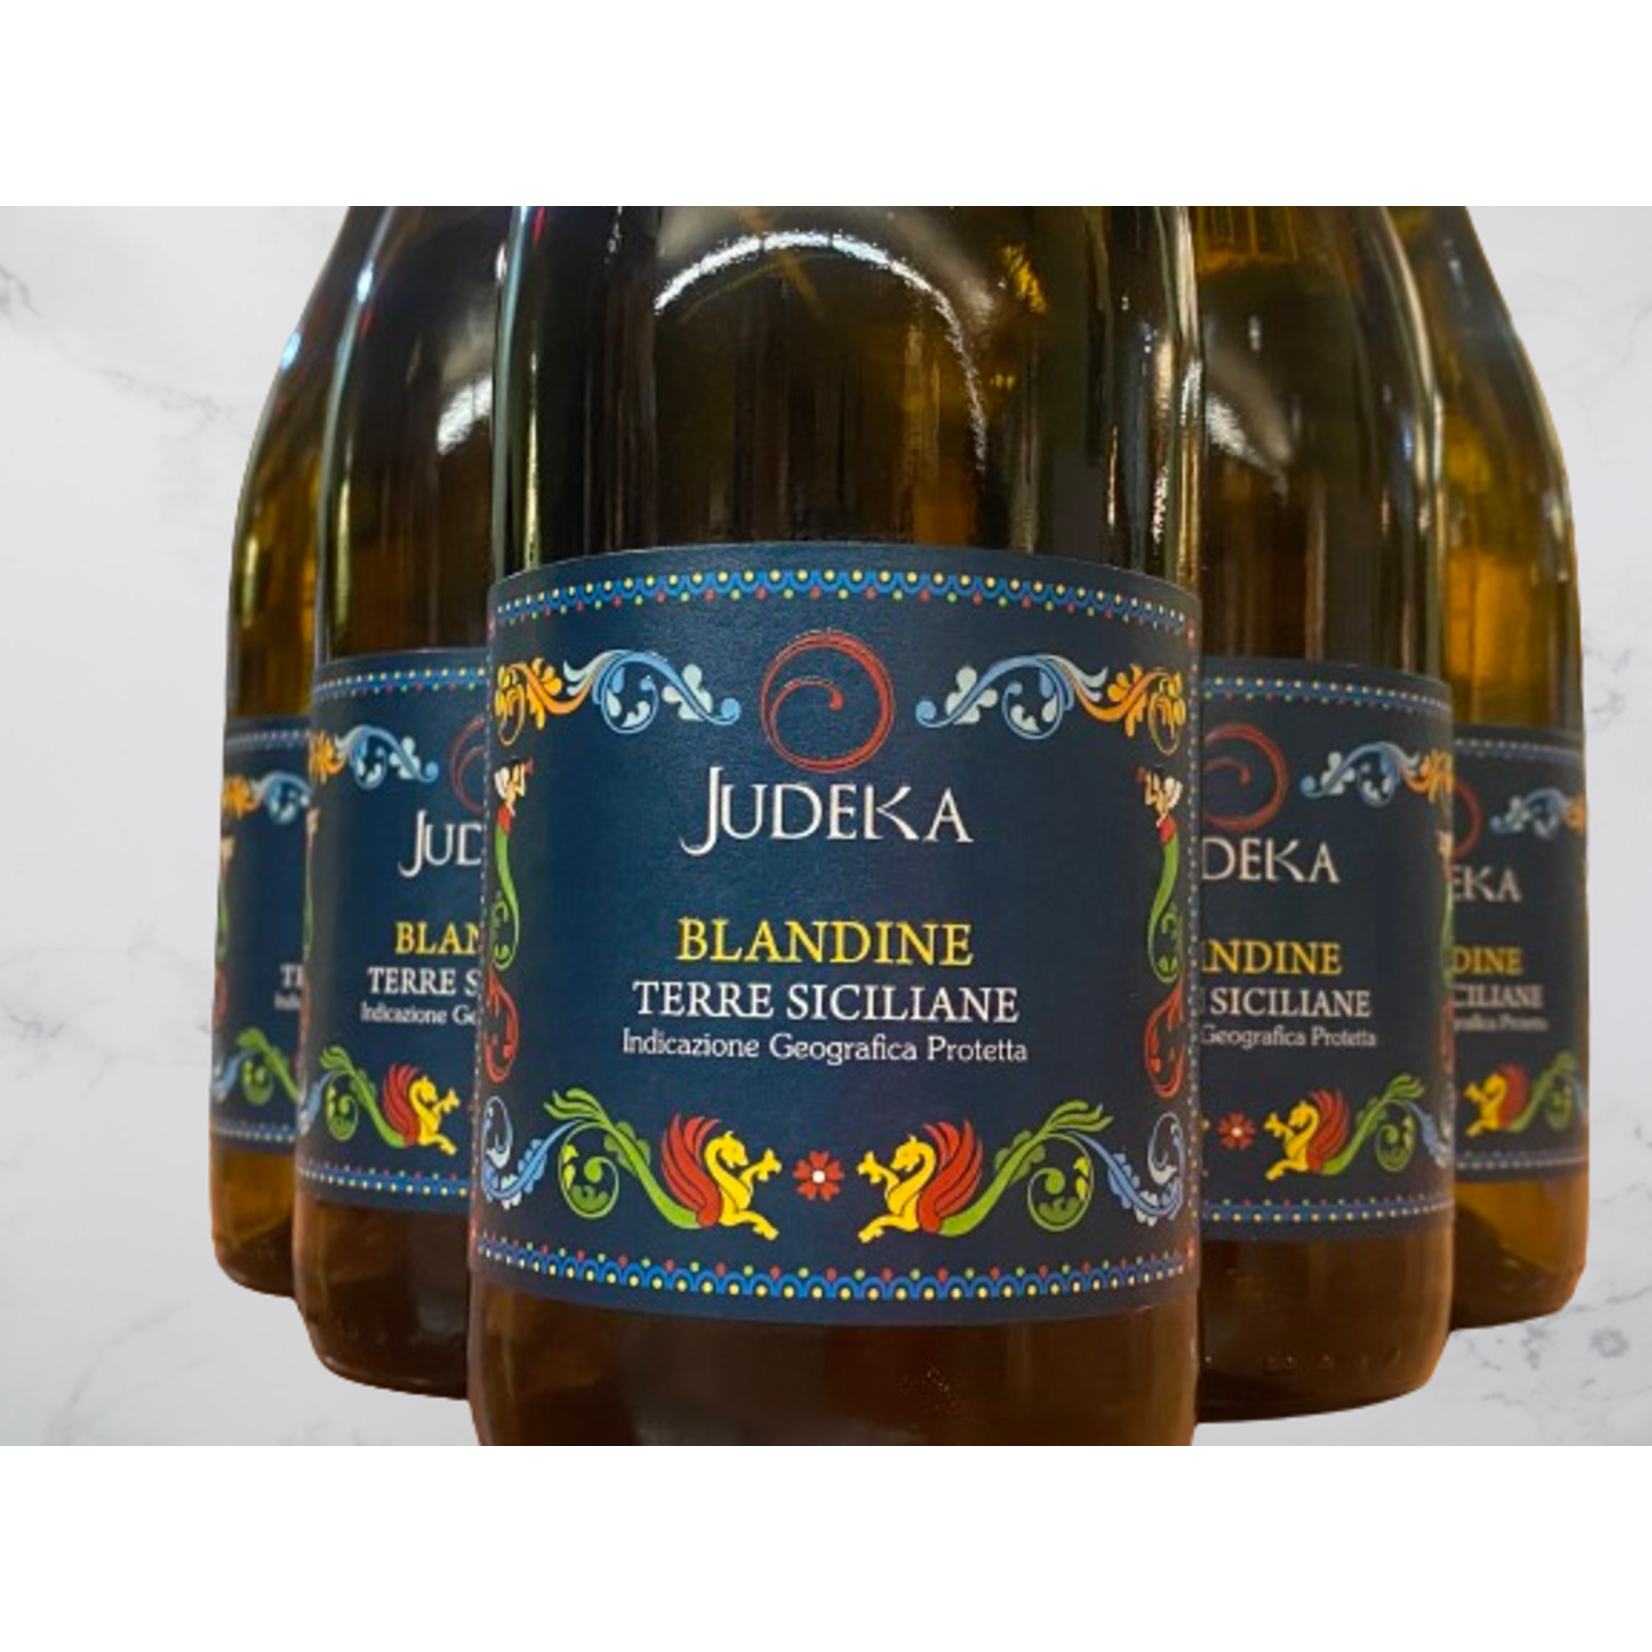 Judeka Blandine Bianco Terre Siciliane by Judeka 2019  Vittoria  Sicily